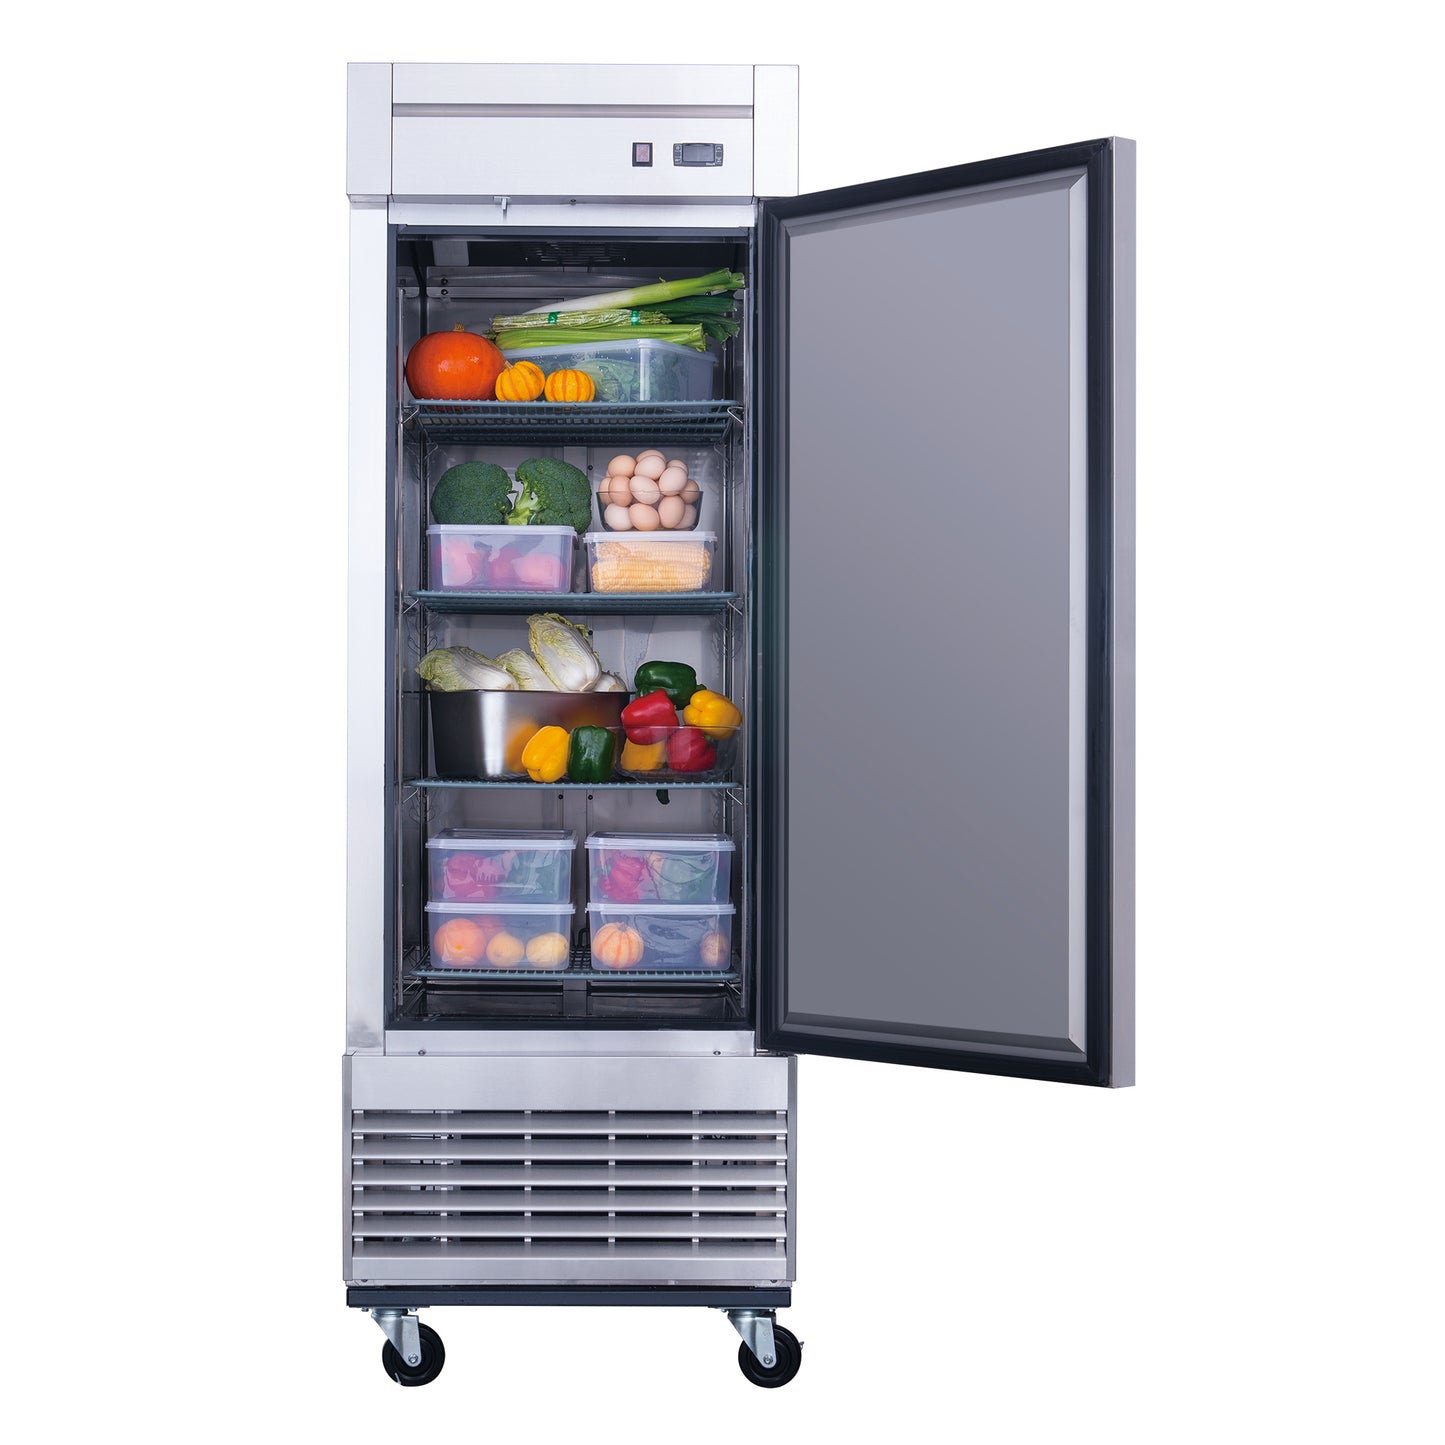 Dukers D28R 17.7 cu. ft. Single Door Commercial Refrigerator